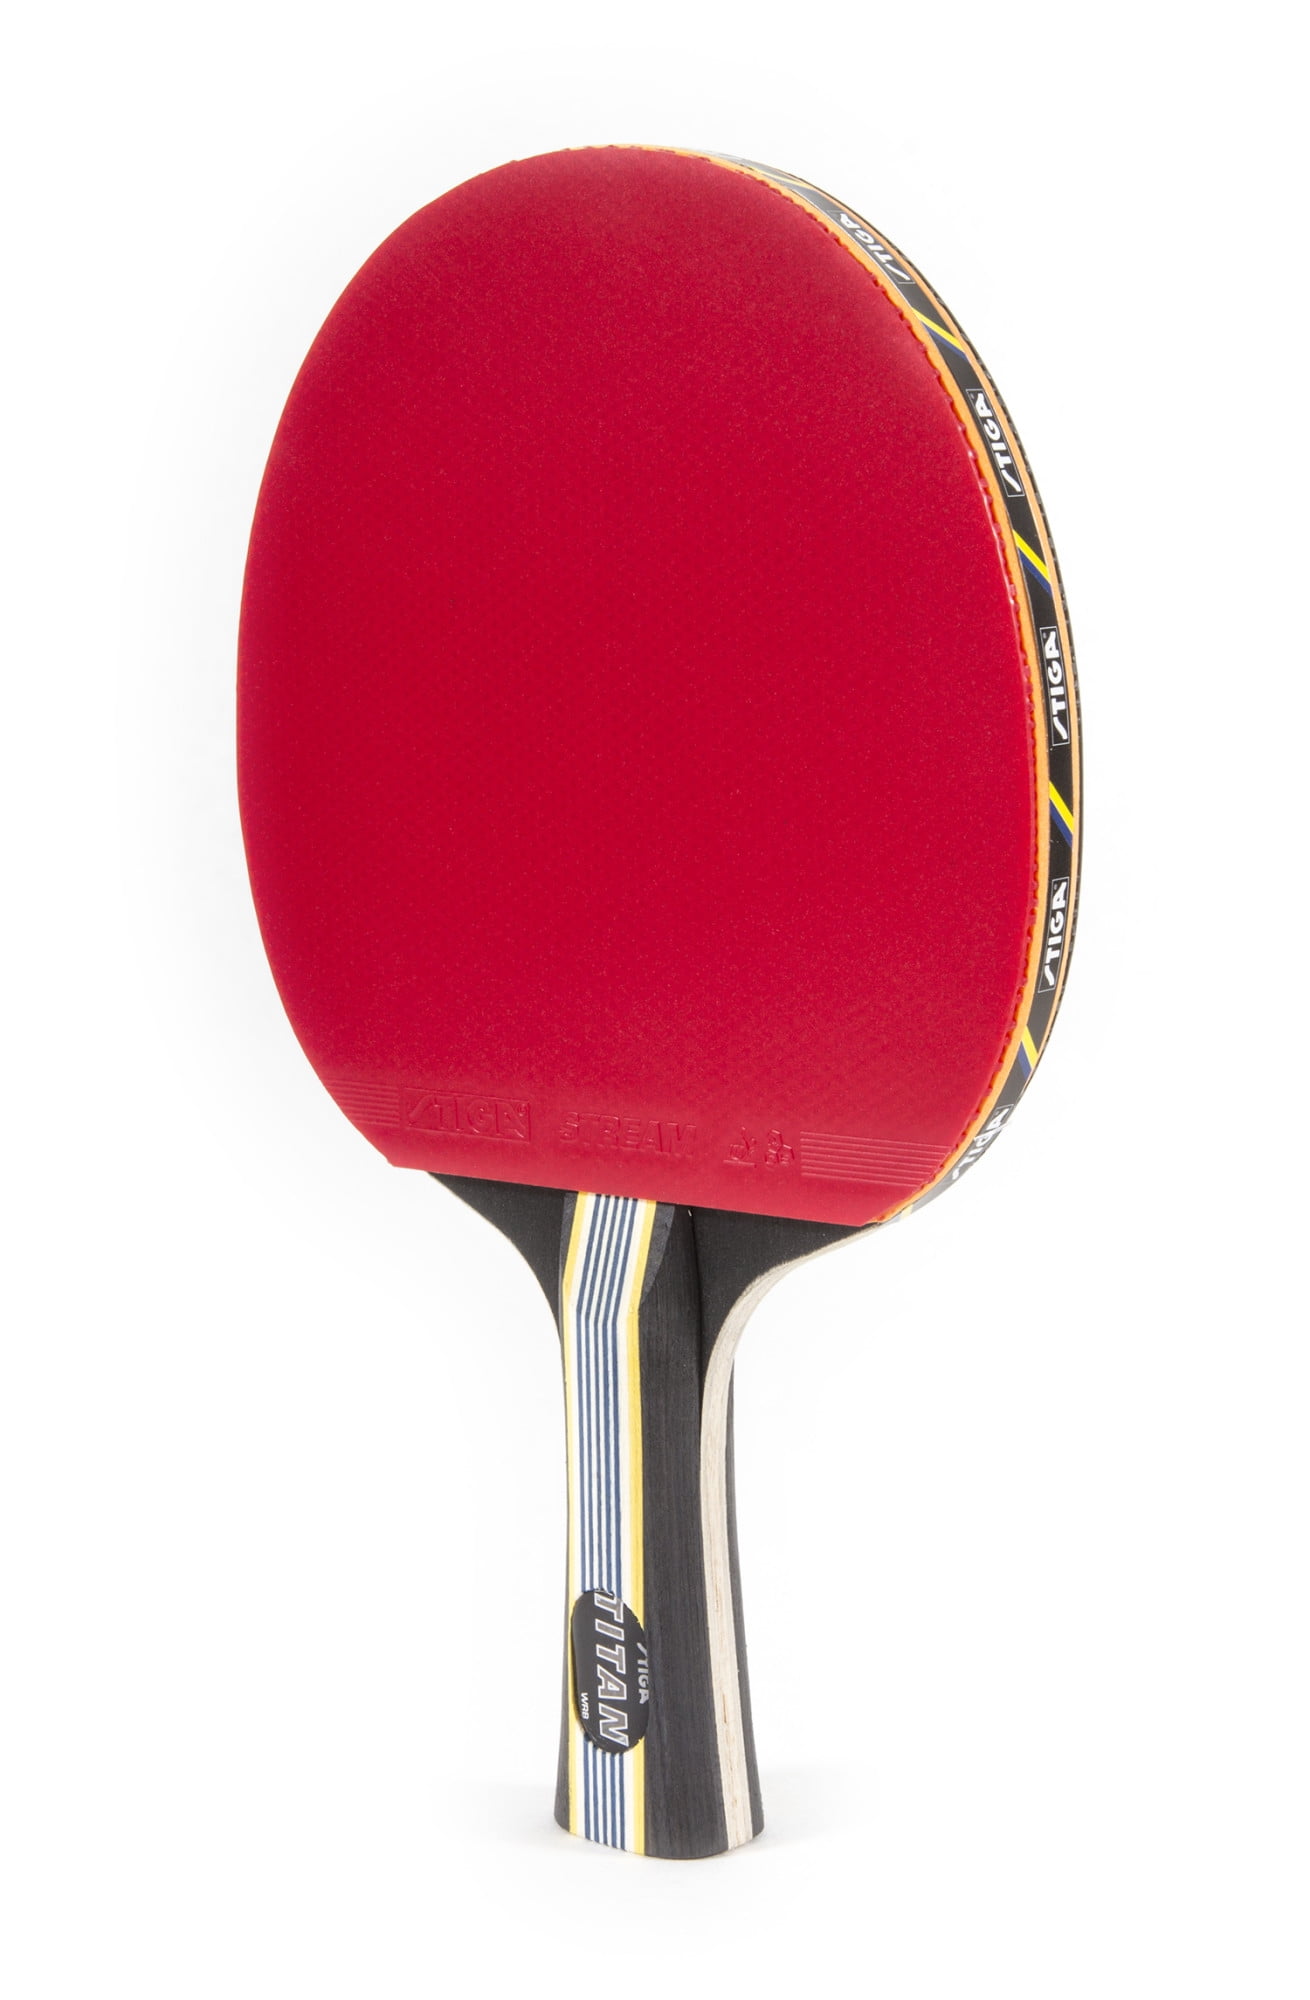 Stiga Pro Carbon Premium Ping Pong Table Tennis Paddle Racket Titan Tournament 